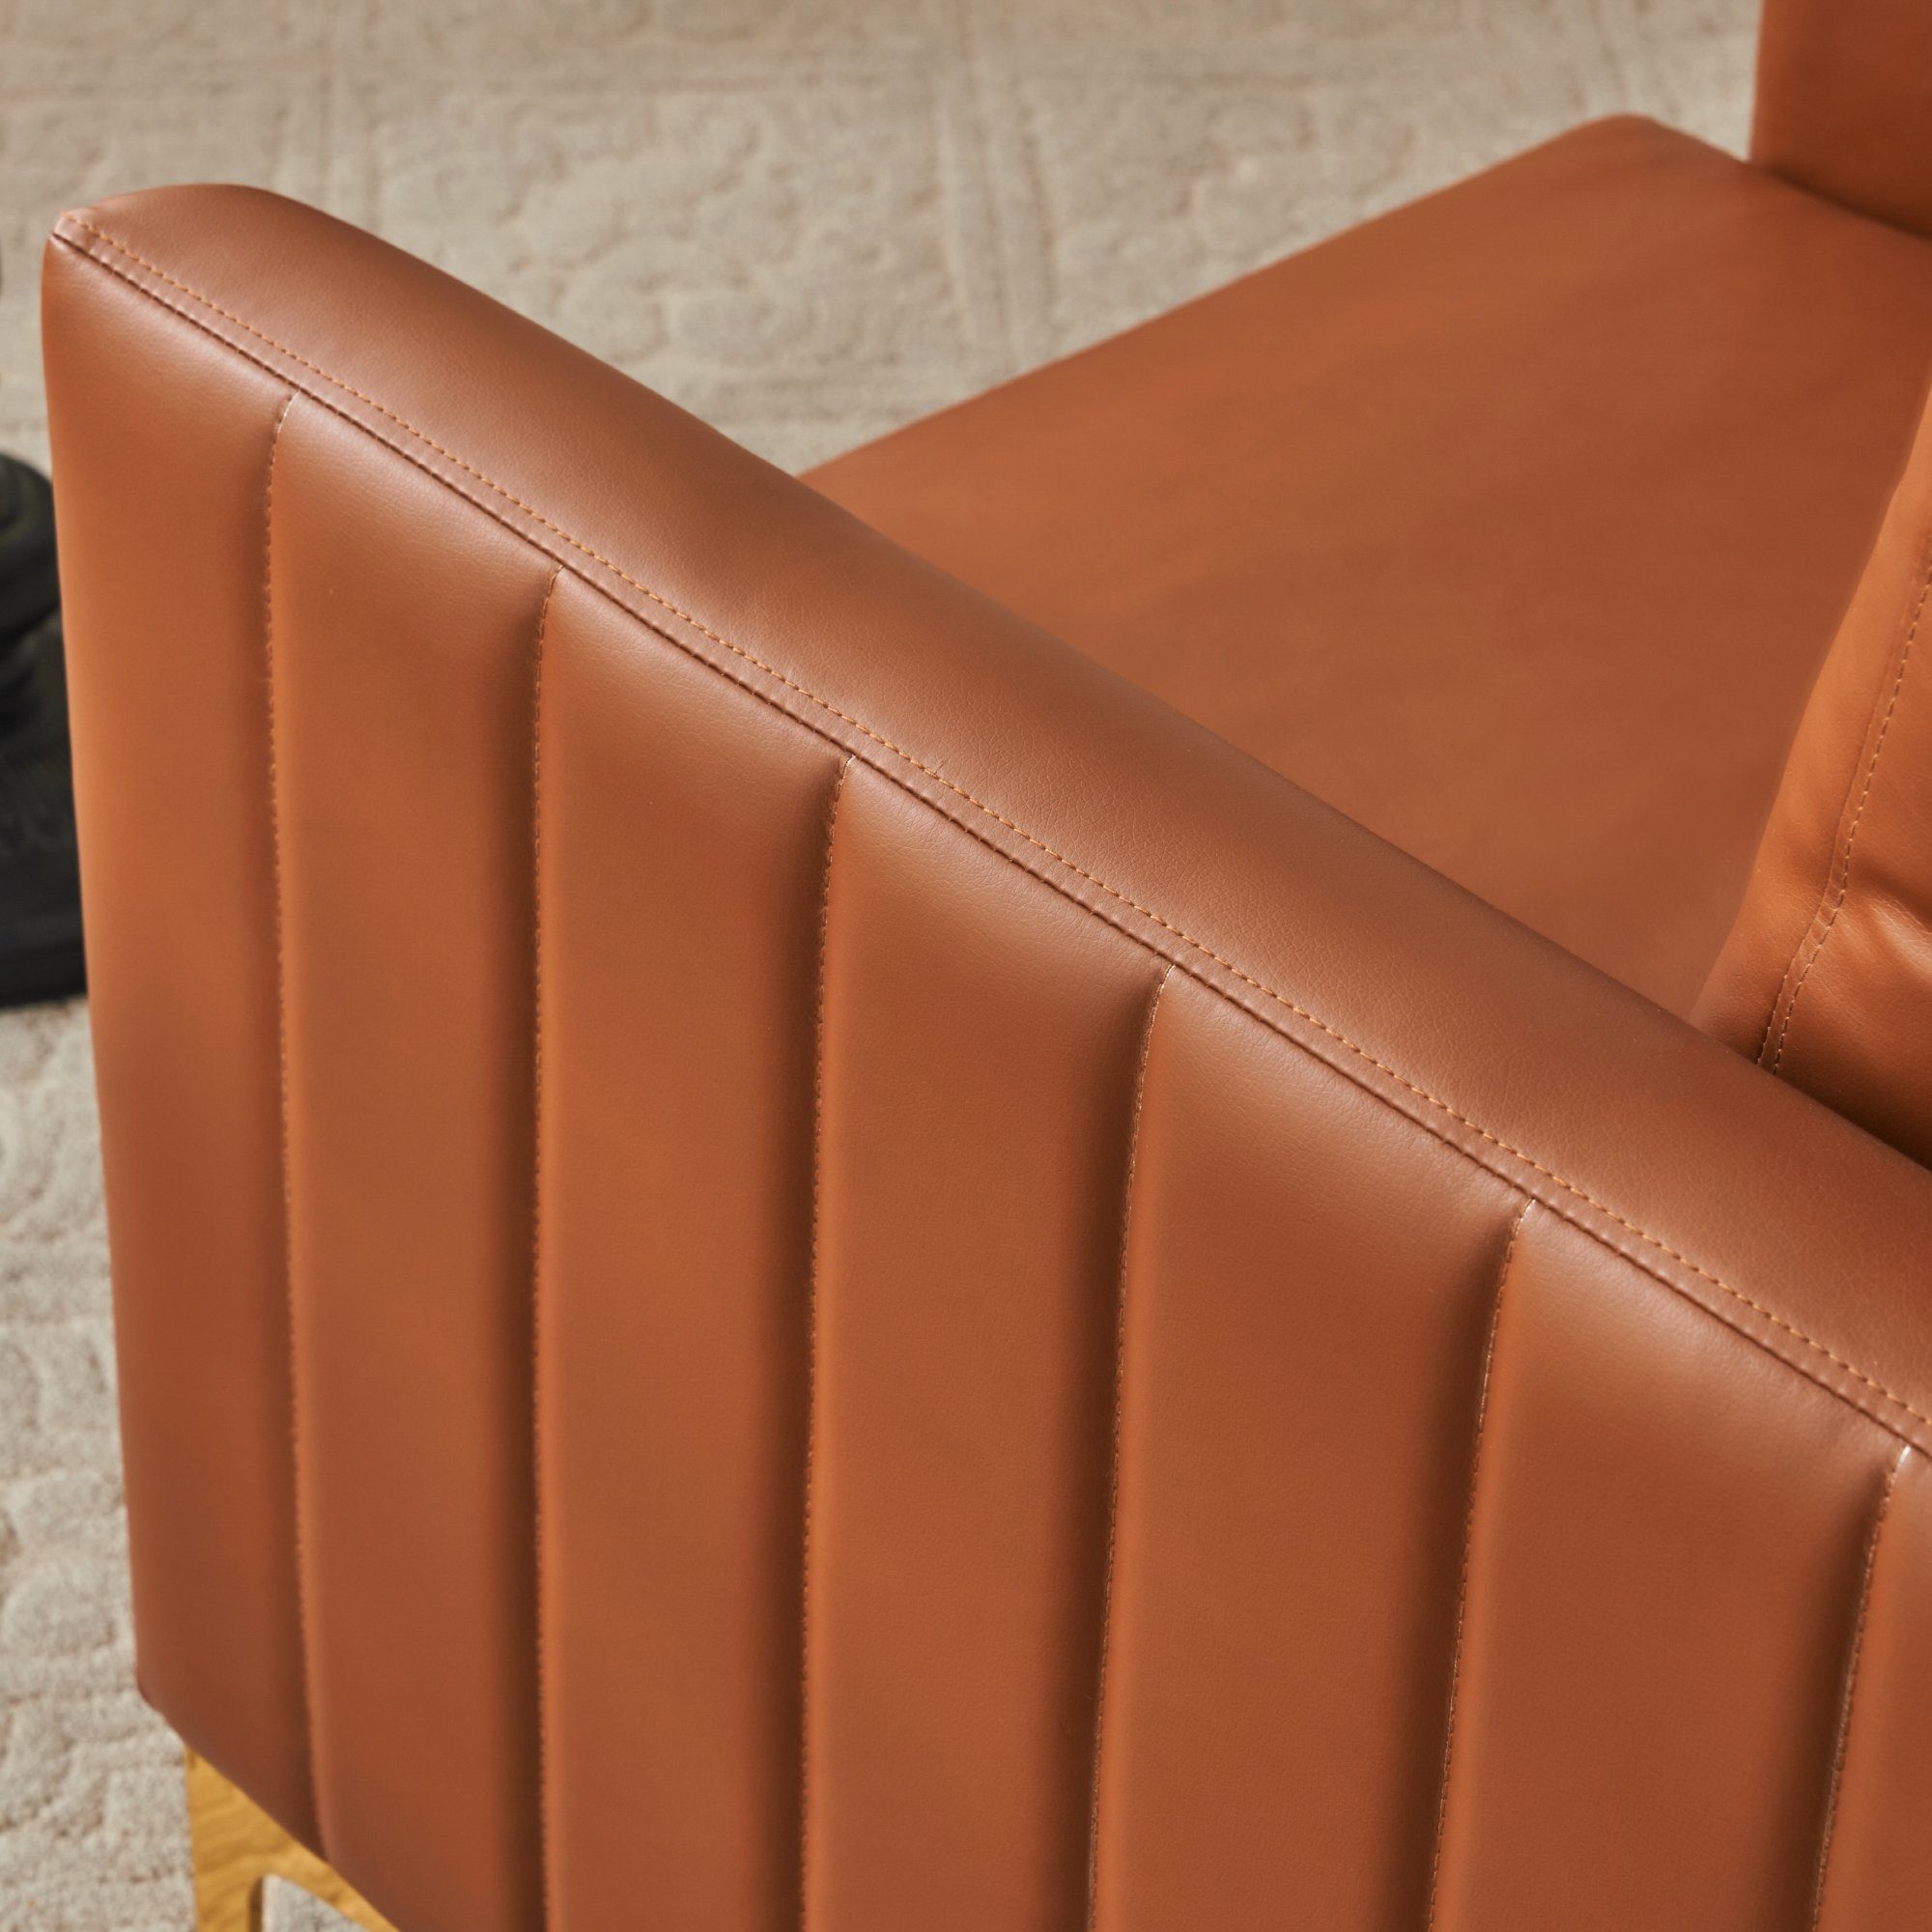 Moderner braun Chenille-Stoffstuhl, Kissen Sessel GLIESE Lounge-Sessel, Ohrensessel,mit